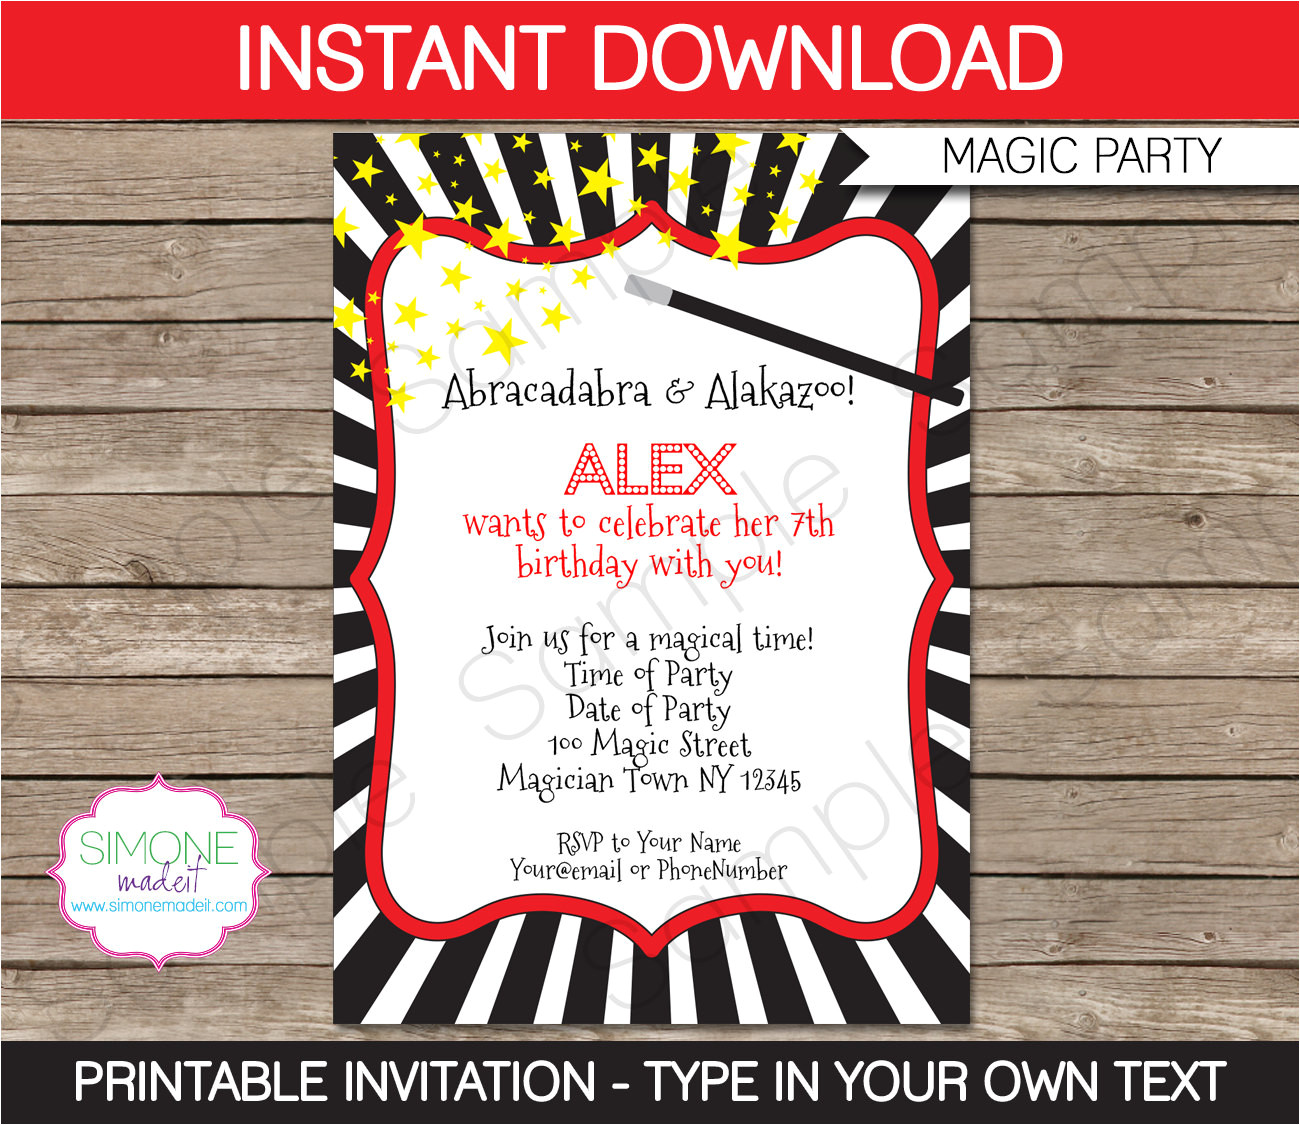 magic party invitation instant download